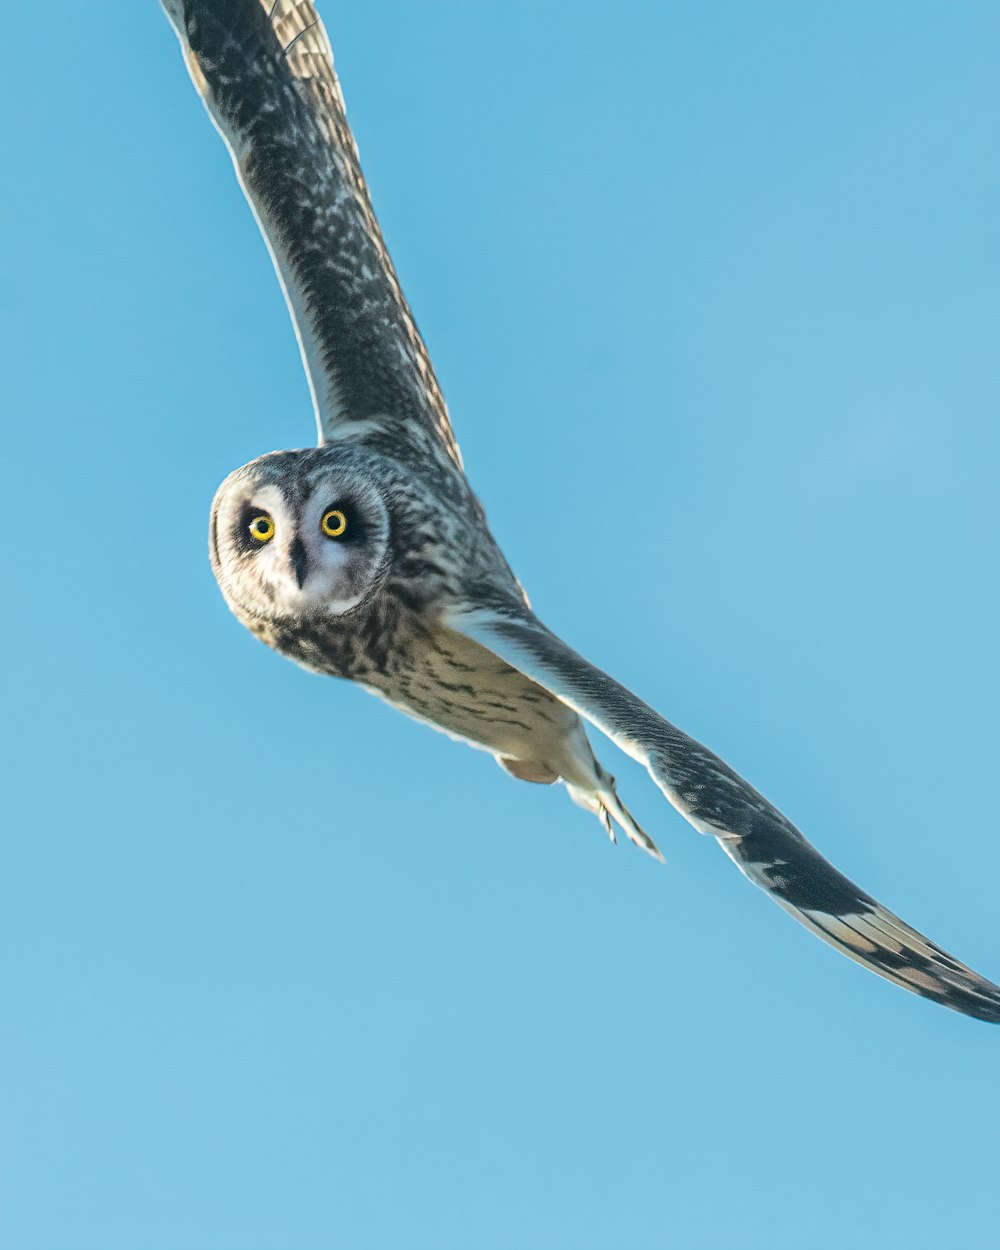 white and black owl flying under blue sky during daytime